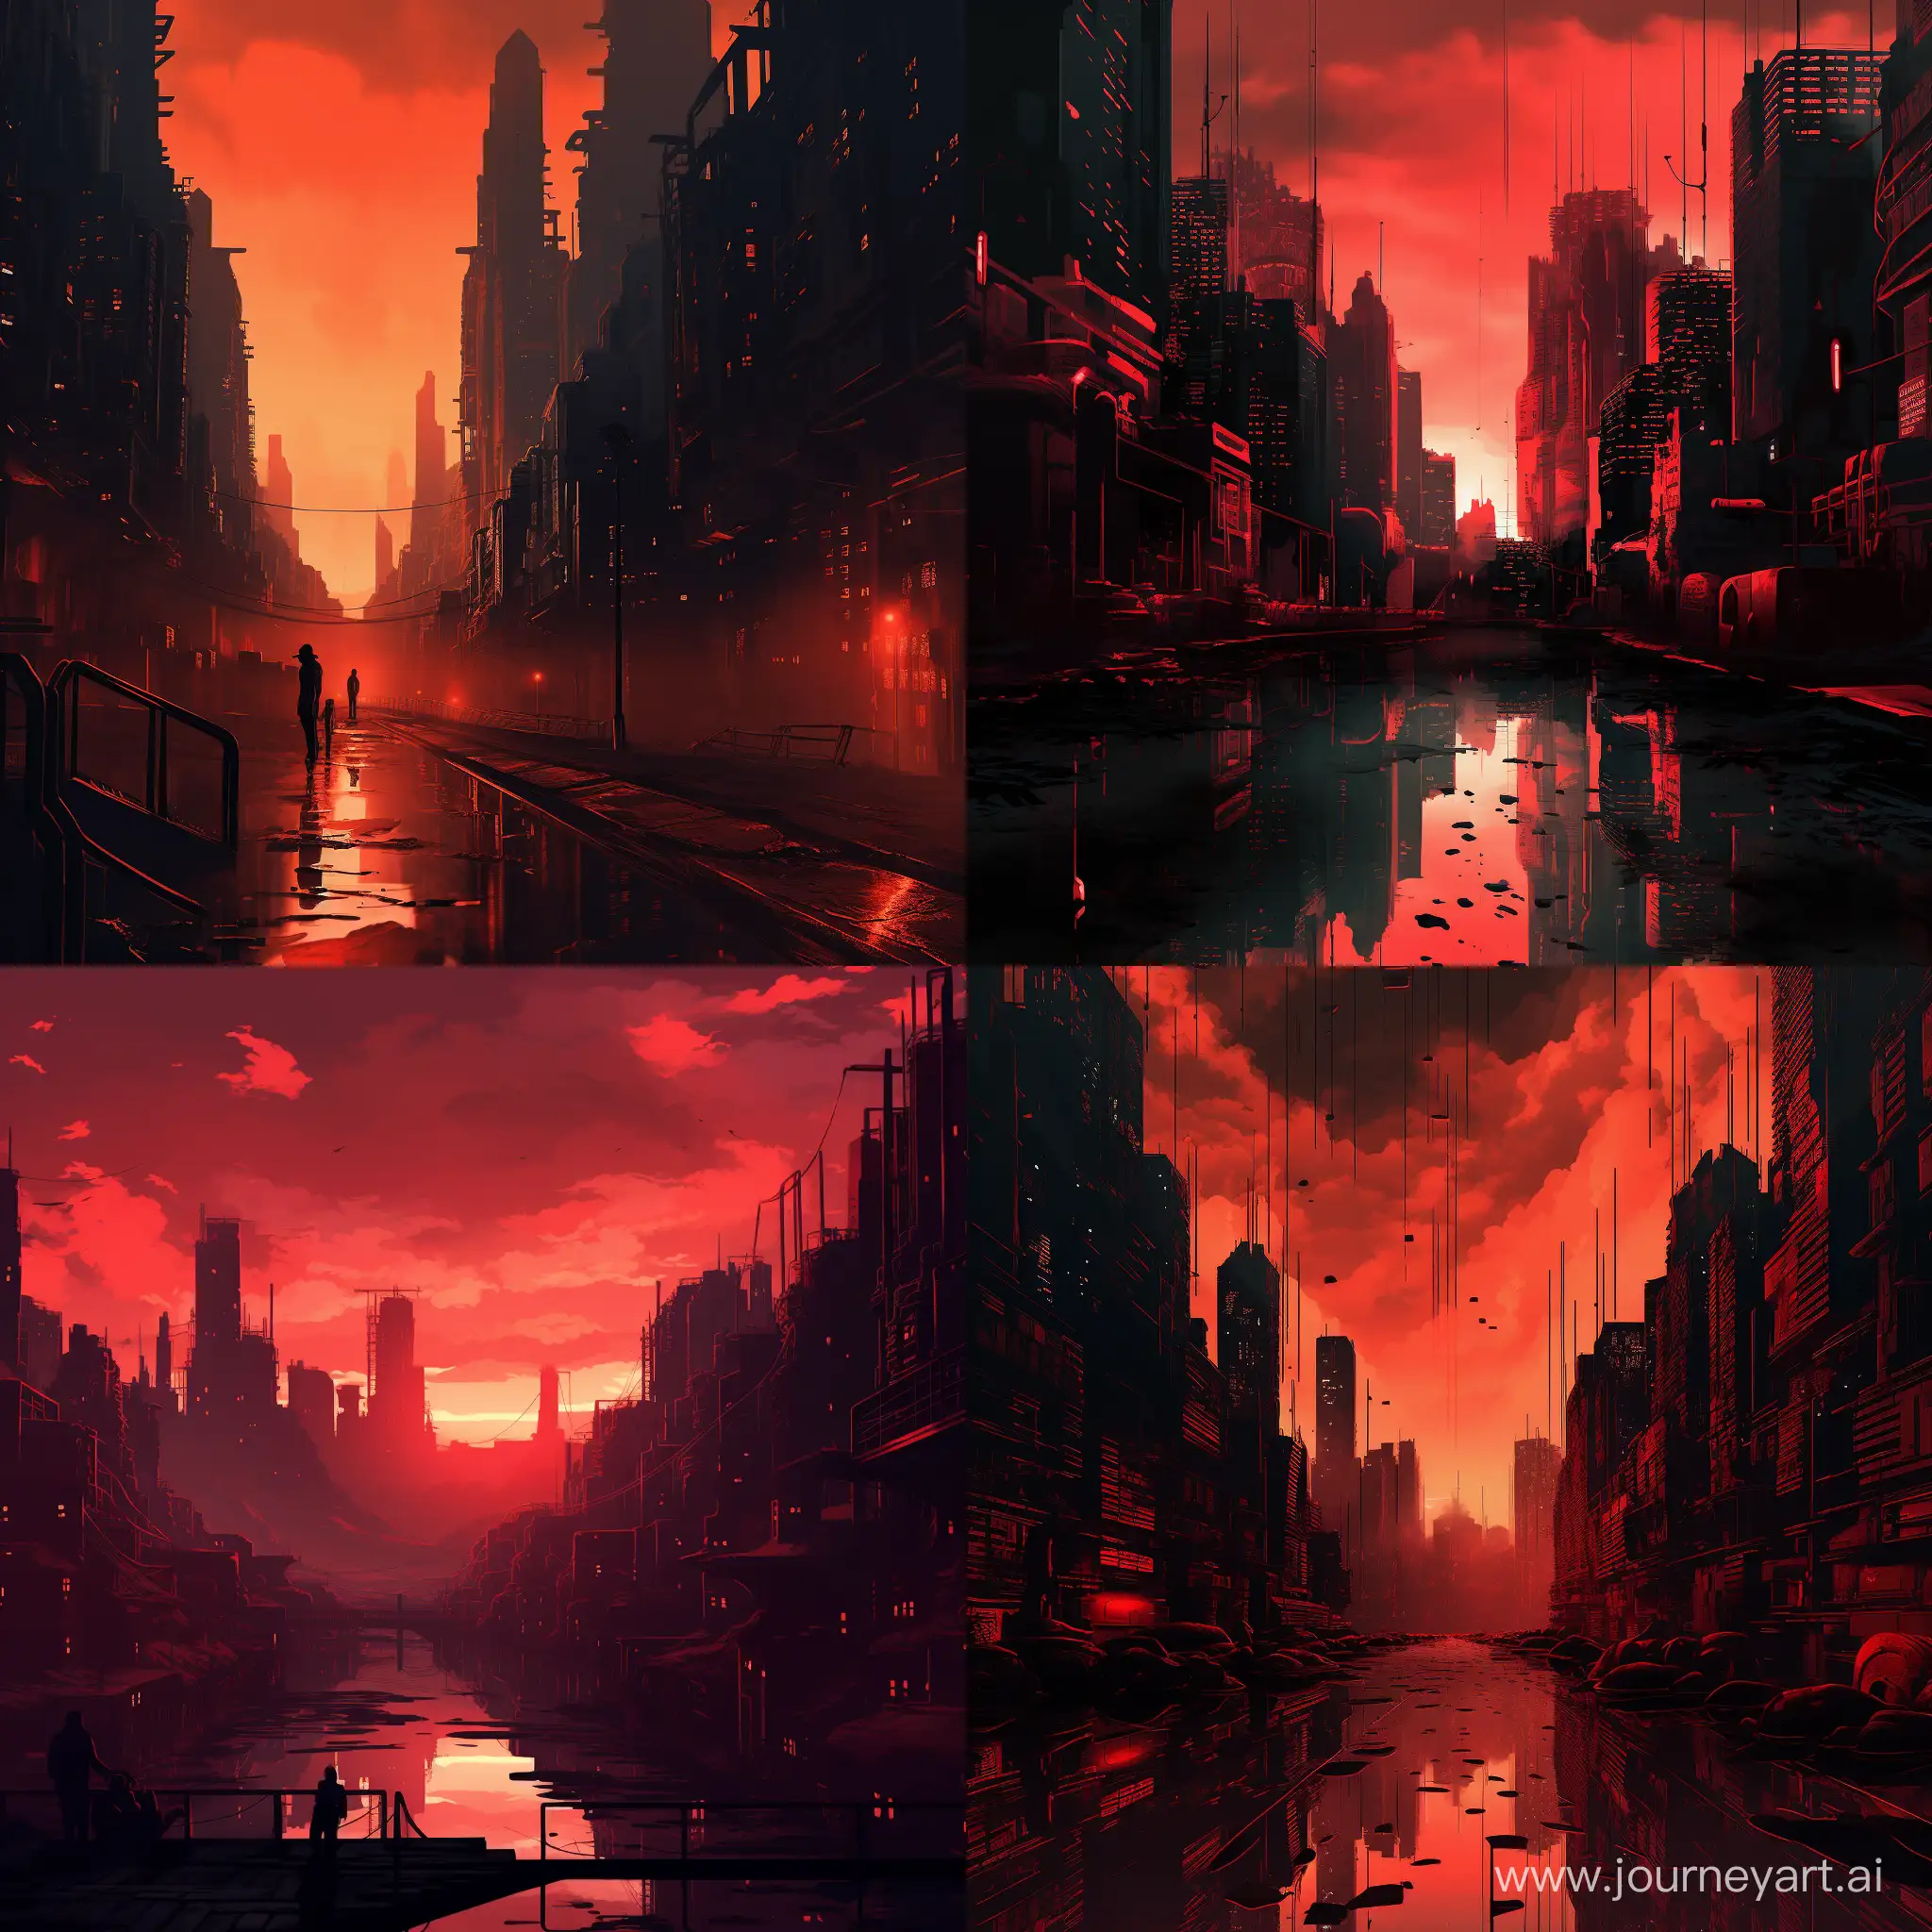 Futuristic-Cyberpunk-Cityscape-in-Striking-Red-Tones